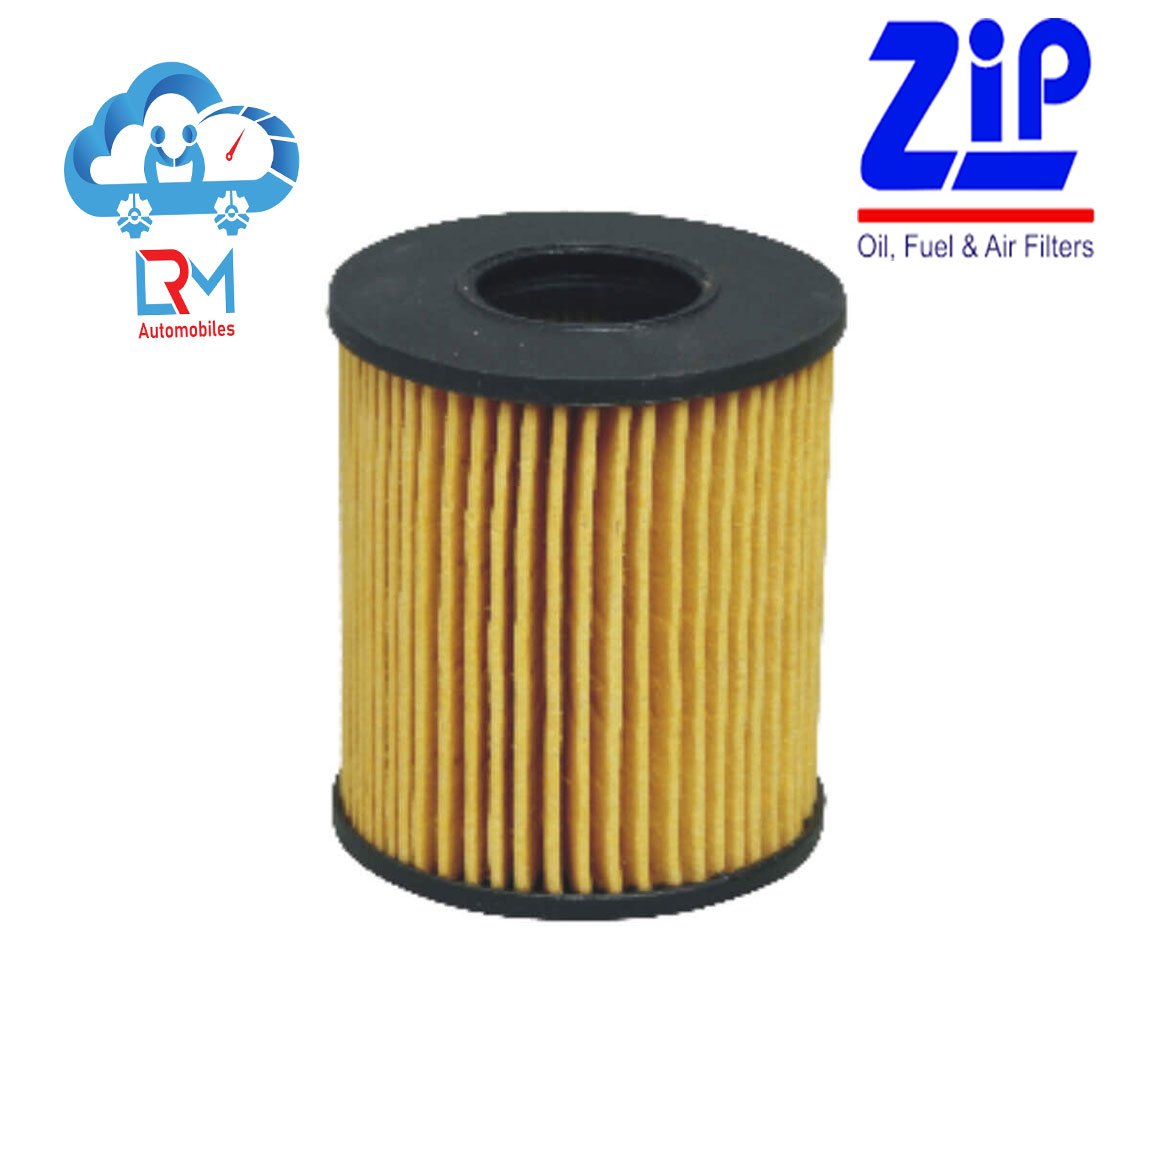 Oil Filter for Optra Magnum in Zip Filter